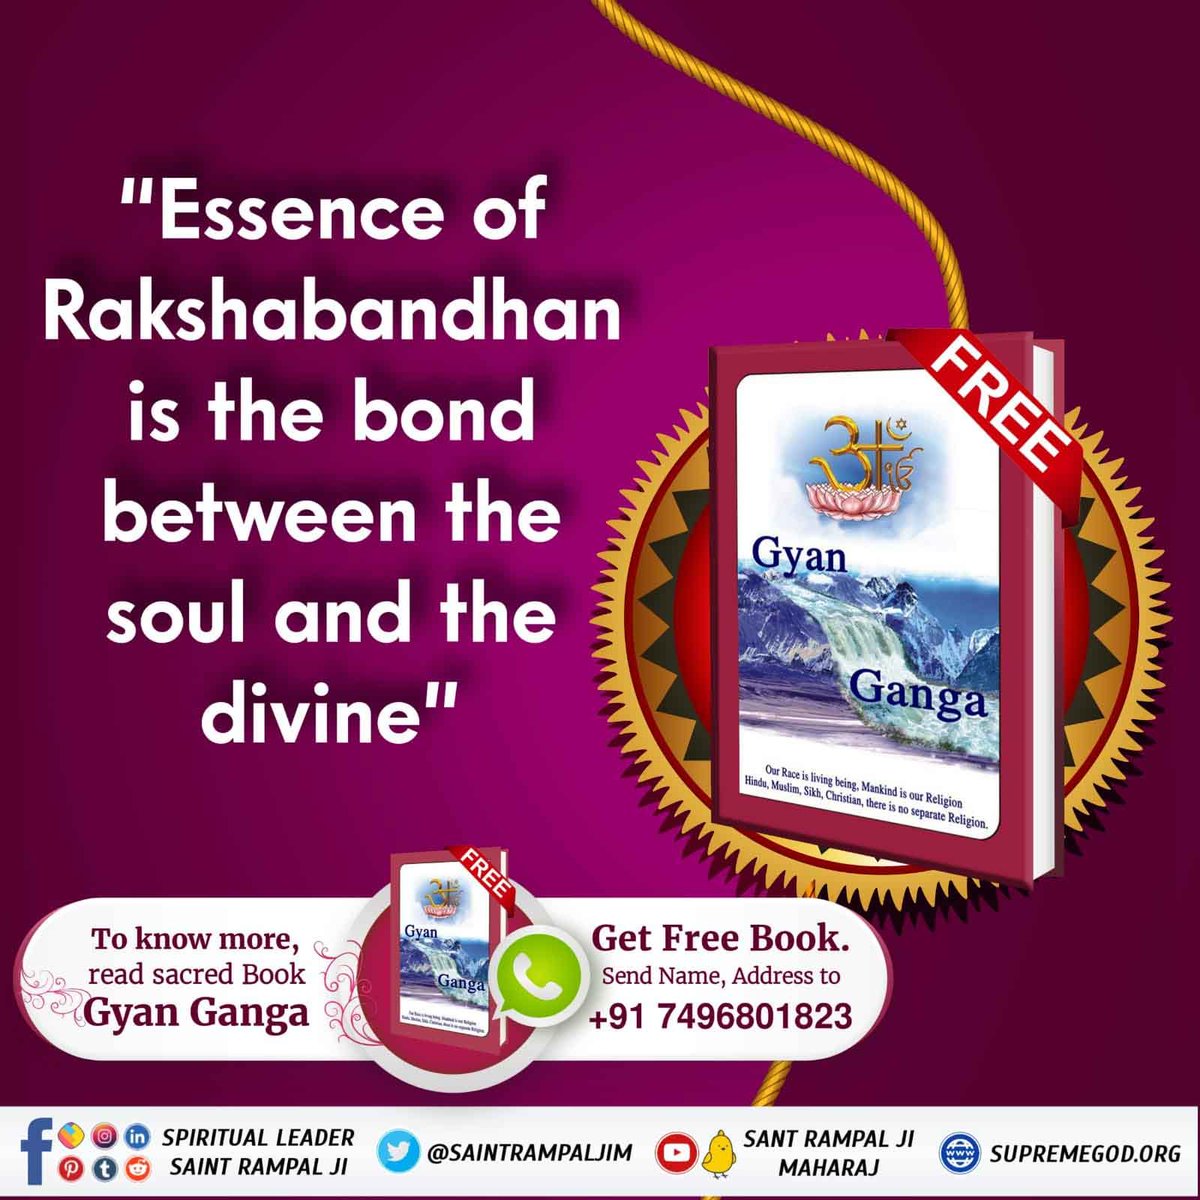 .
#GodMorningMonday
#जगत_उद्धारक_संत_रामपालजी

Essence of Rakshabandhan is the bond between the soul and the divine'

SUBSCRIBE YouTube channel 'Factful Debates'